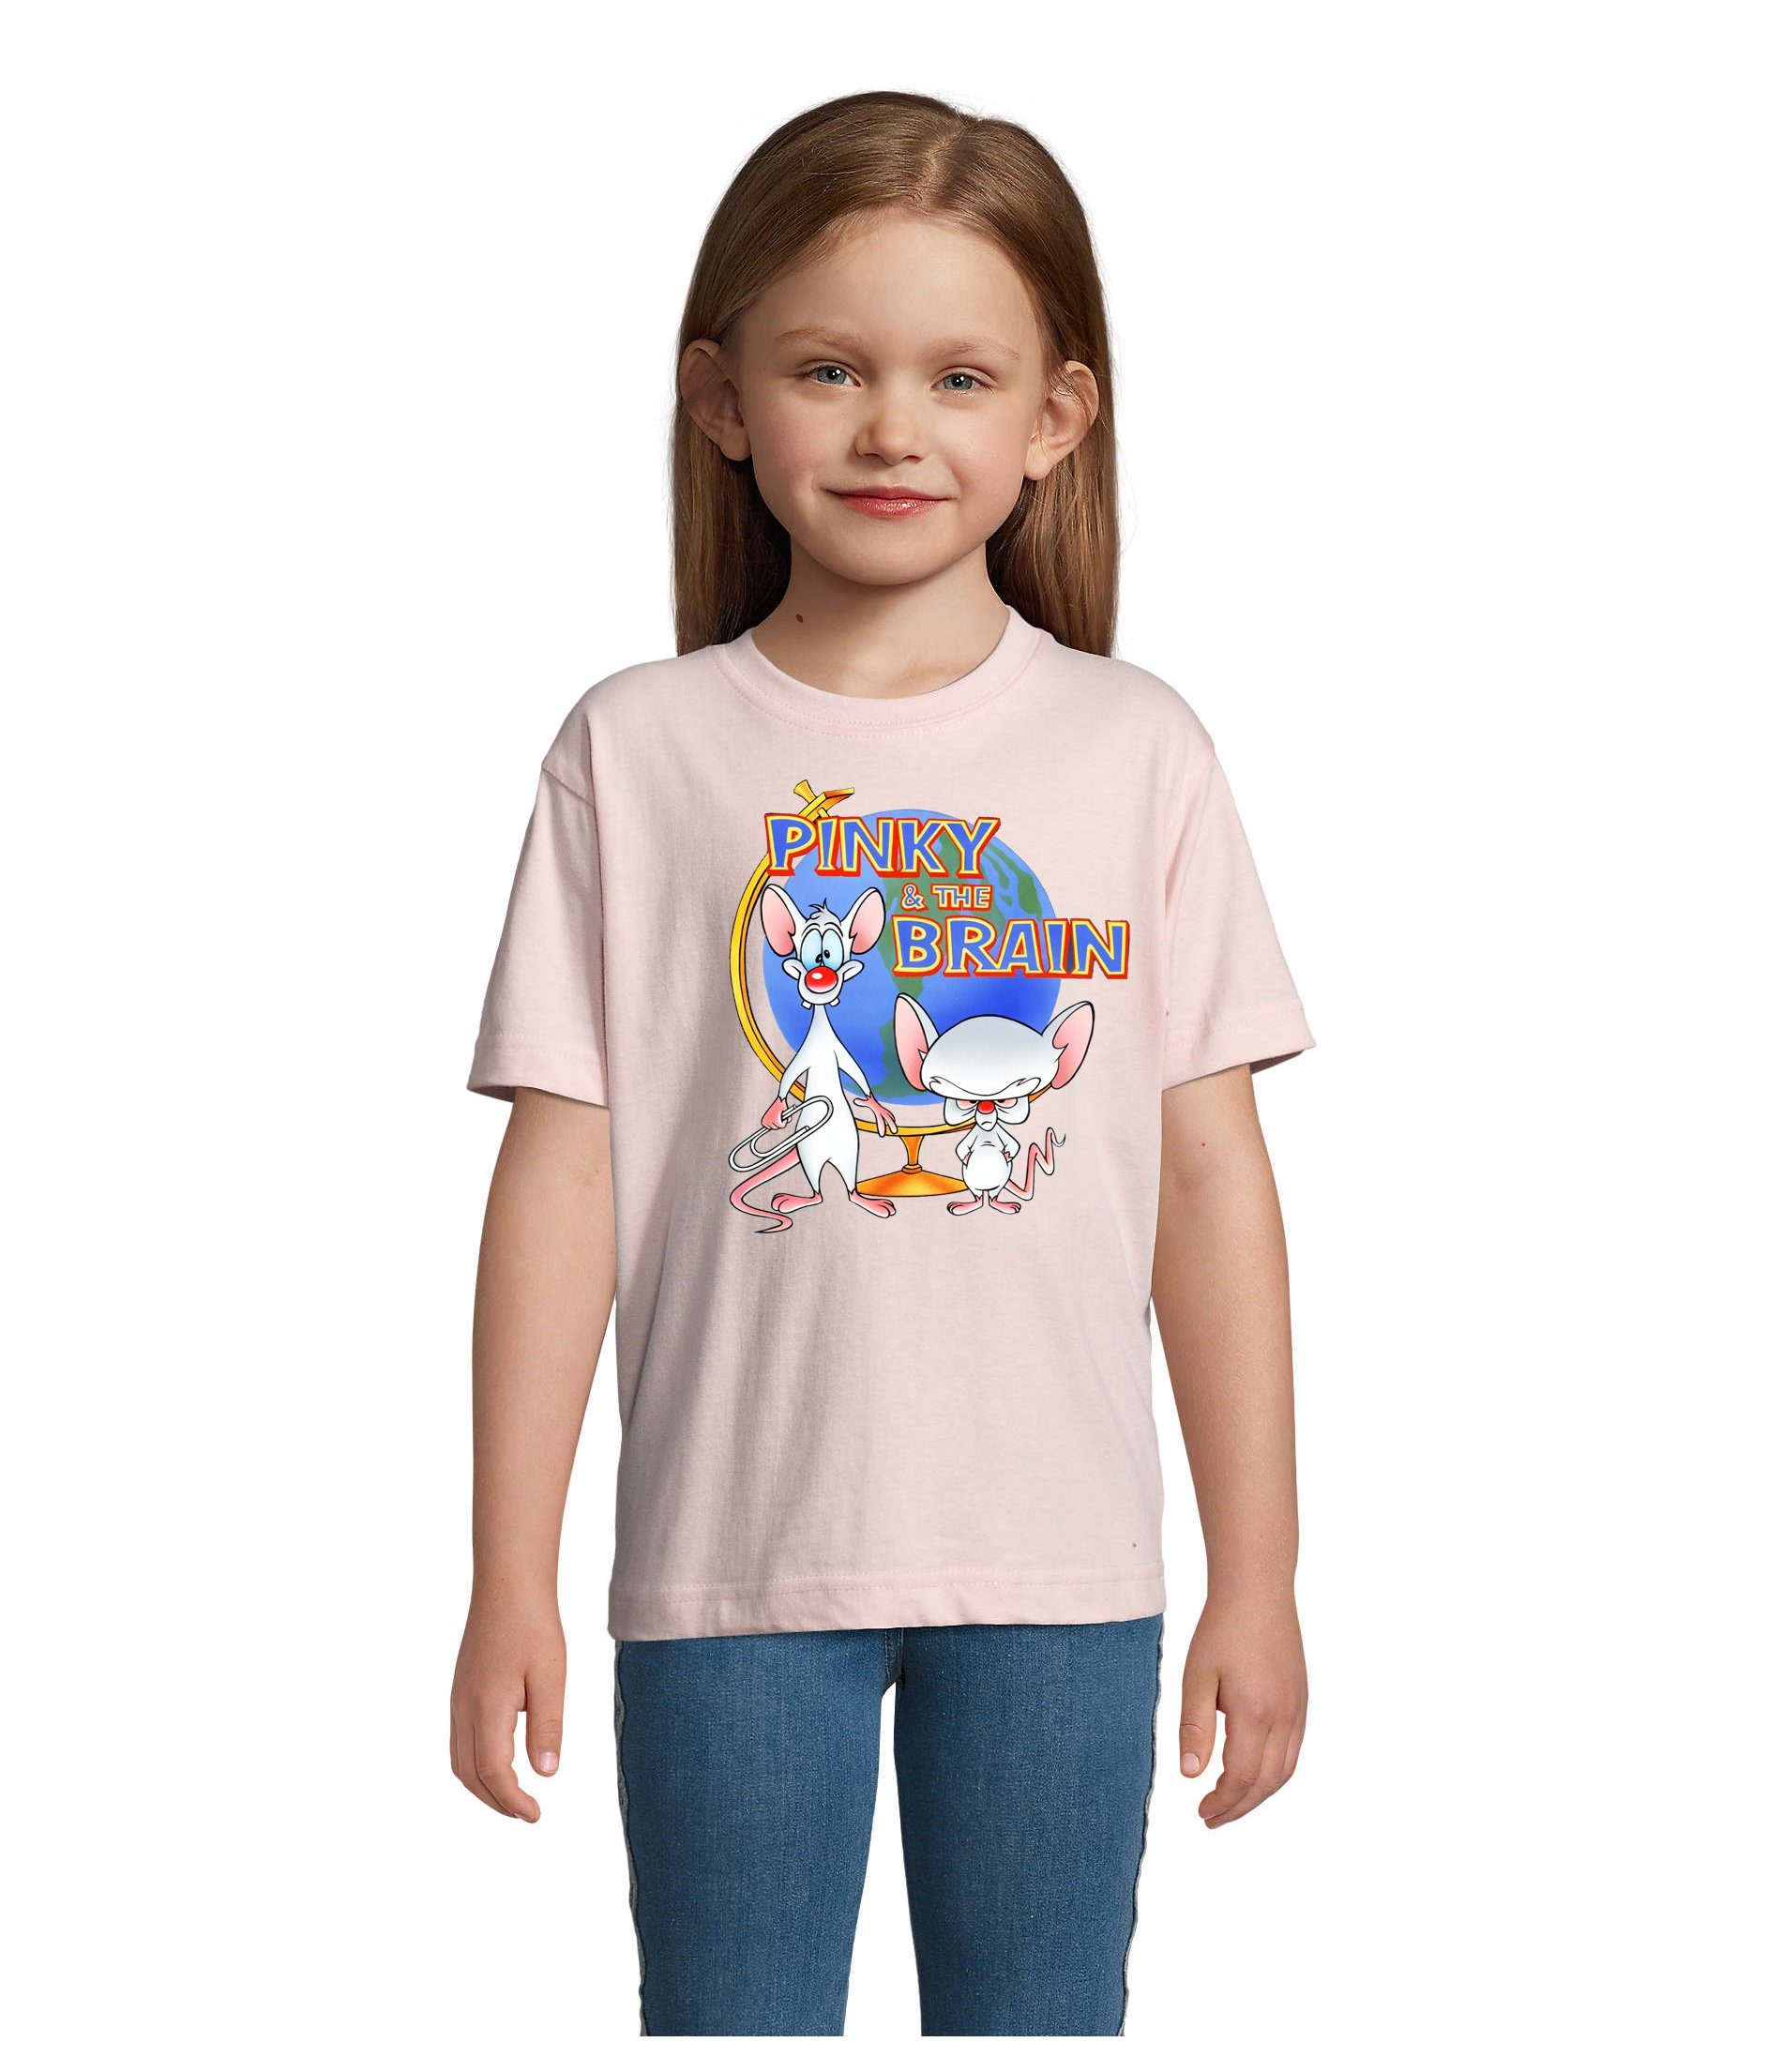 the Rosa Brownie Kinder Weltherrschaft T-Shirt Pinky Cartoon and Comic Brain Blondie &